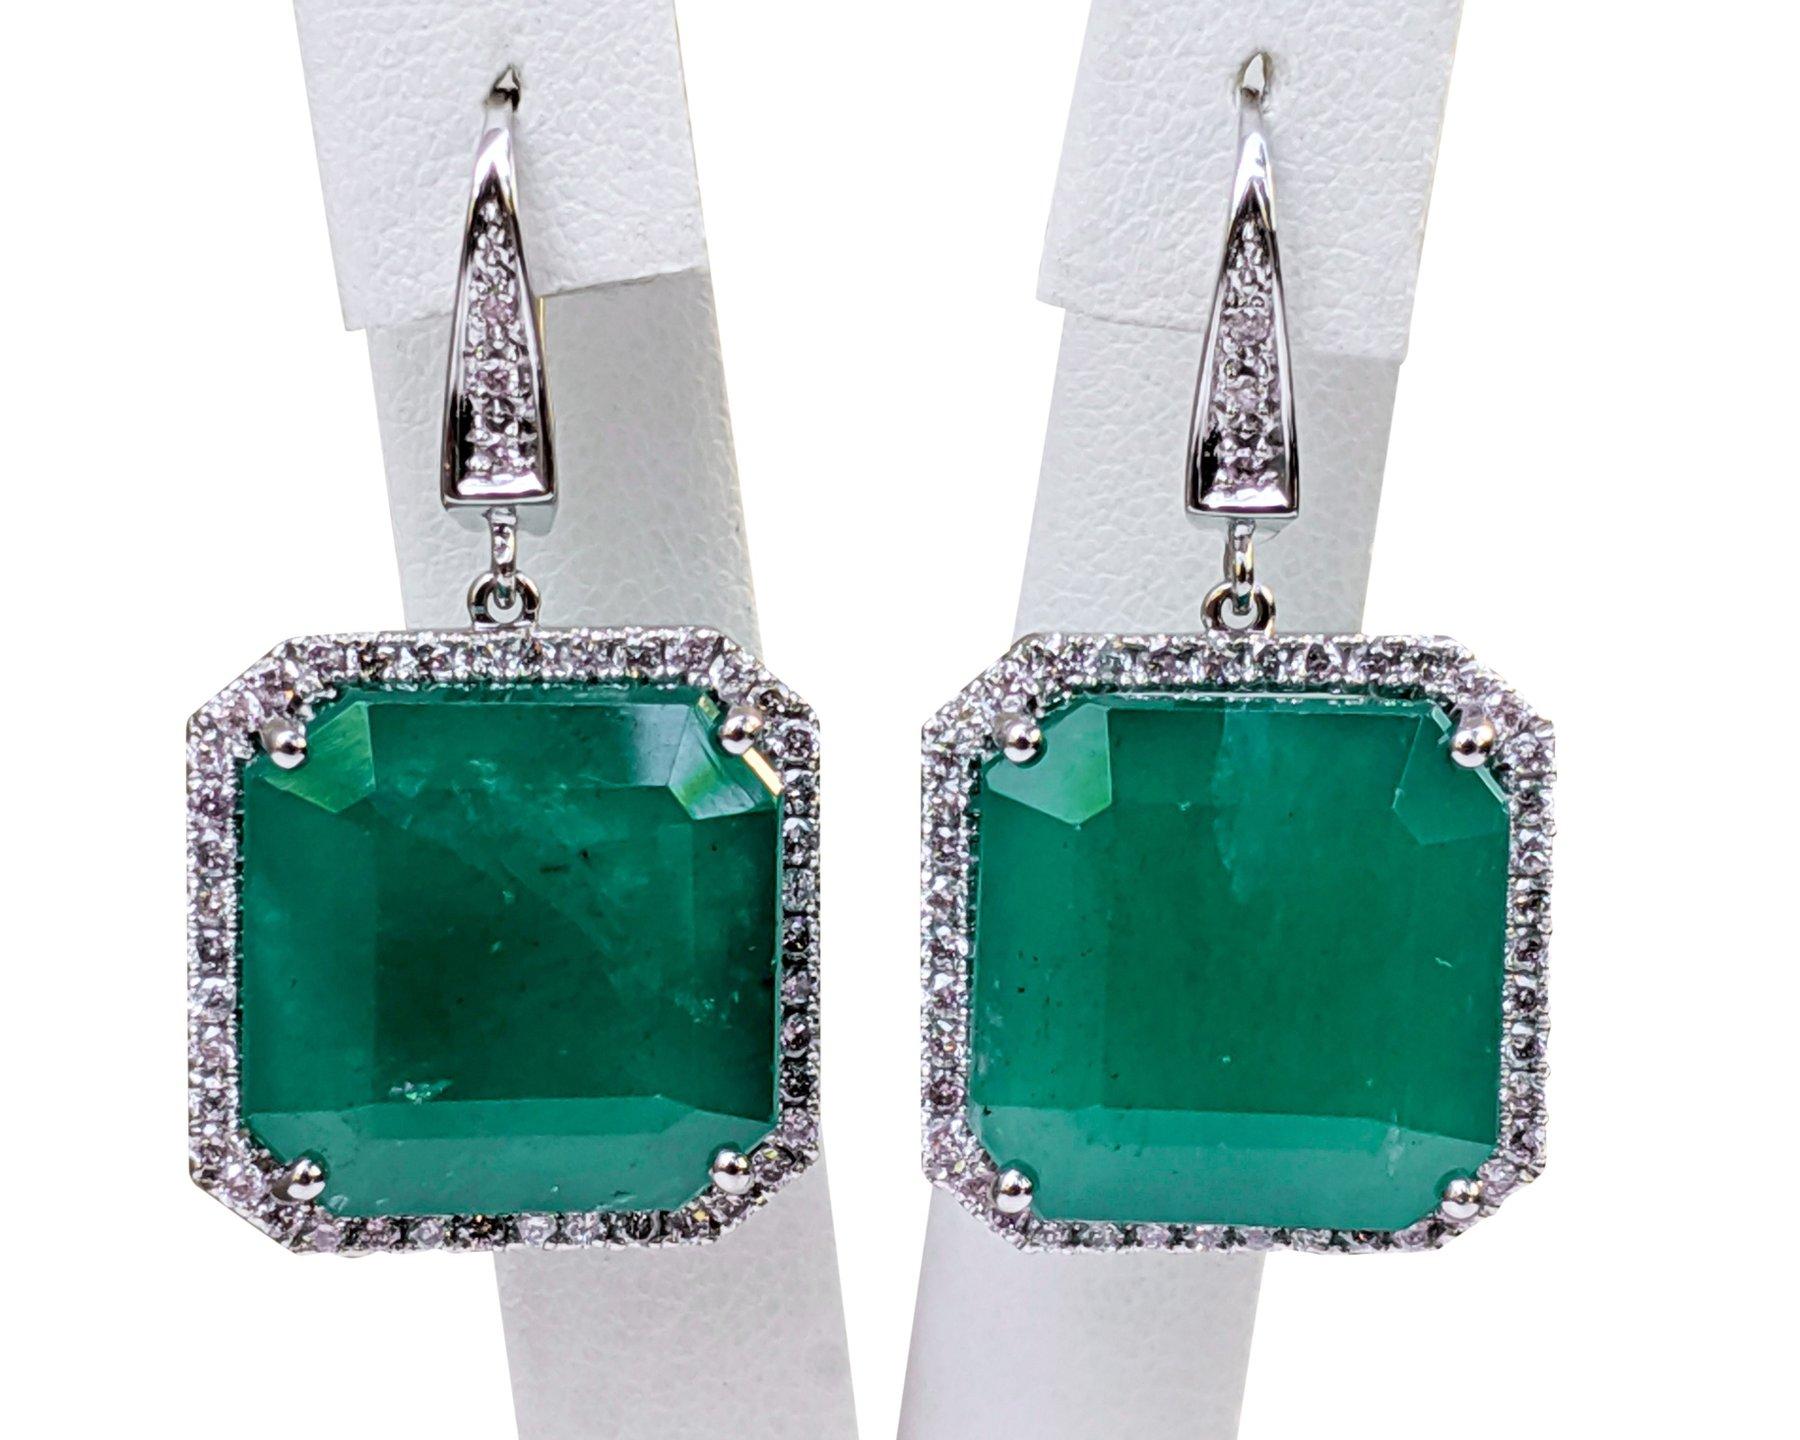 Square Cut NO RESERVE! IGI 37.00Ct Emerald & 0.90Ct Diamonds - 18 kt. White gold - Earrings For Sale